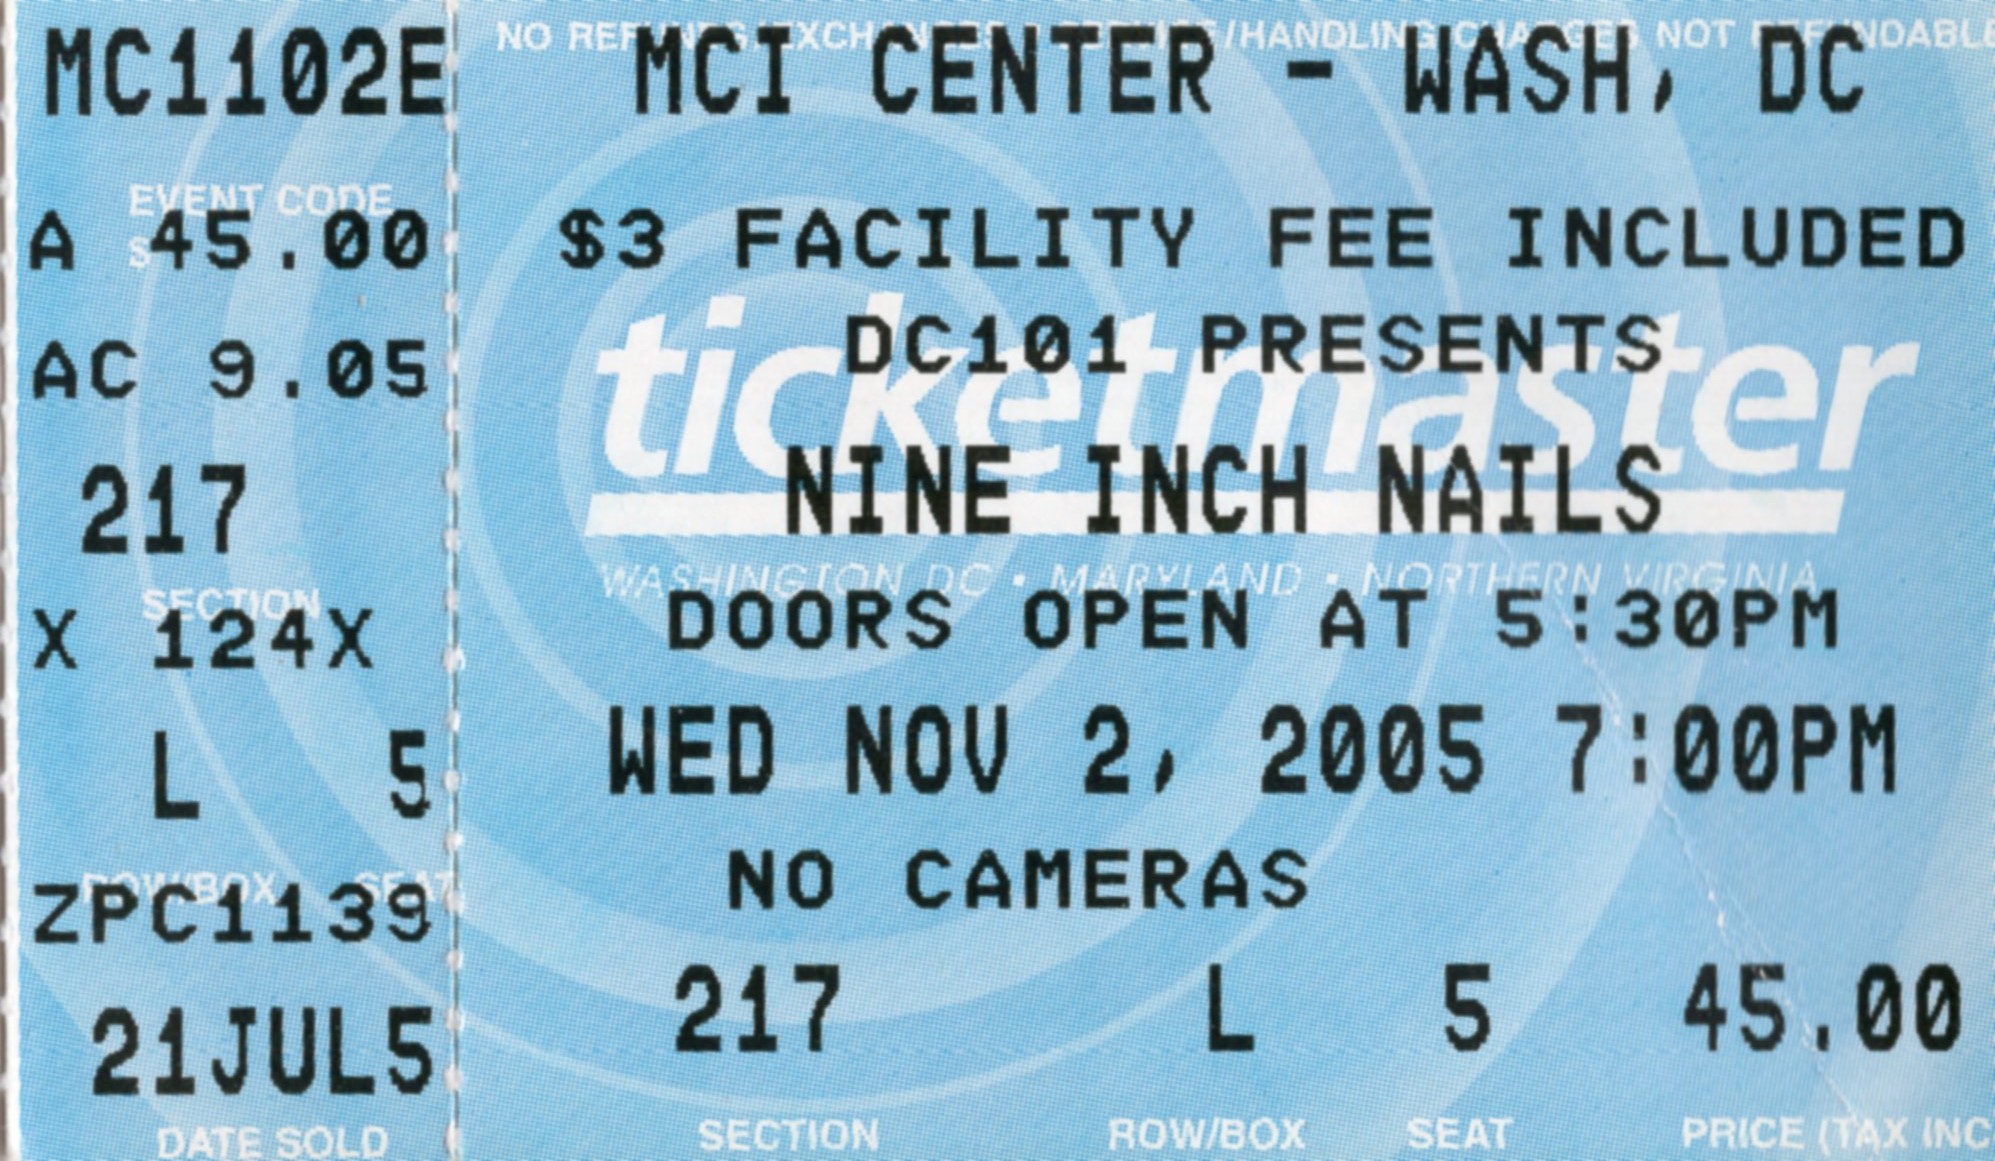 2005/11/02 Ticket